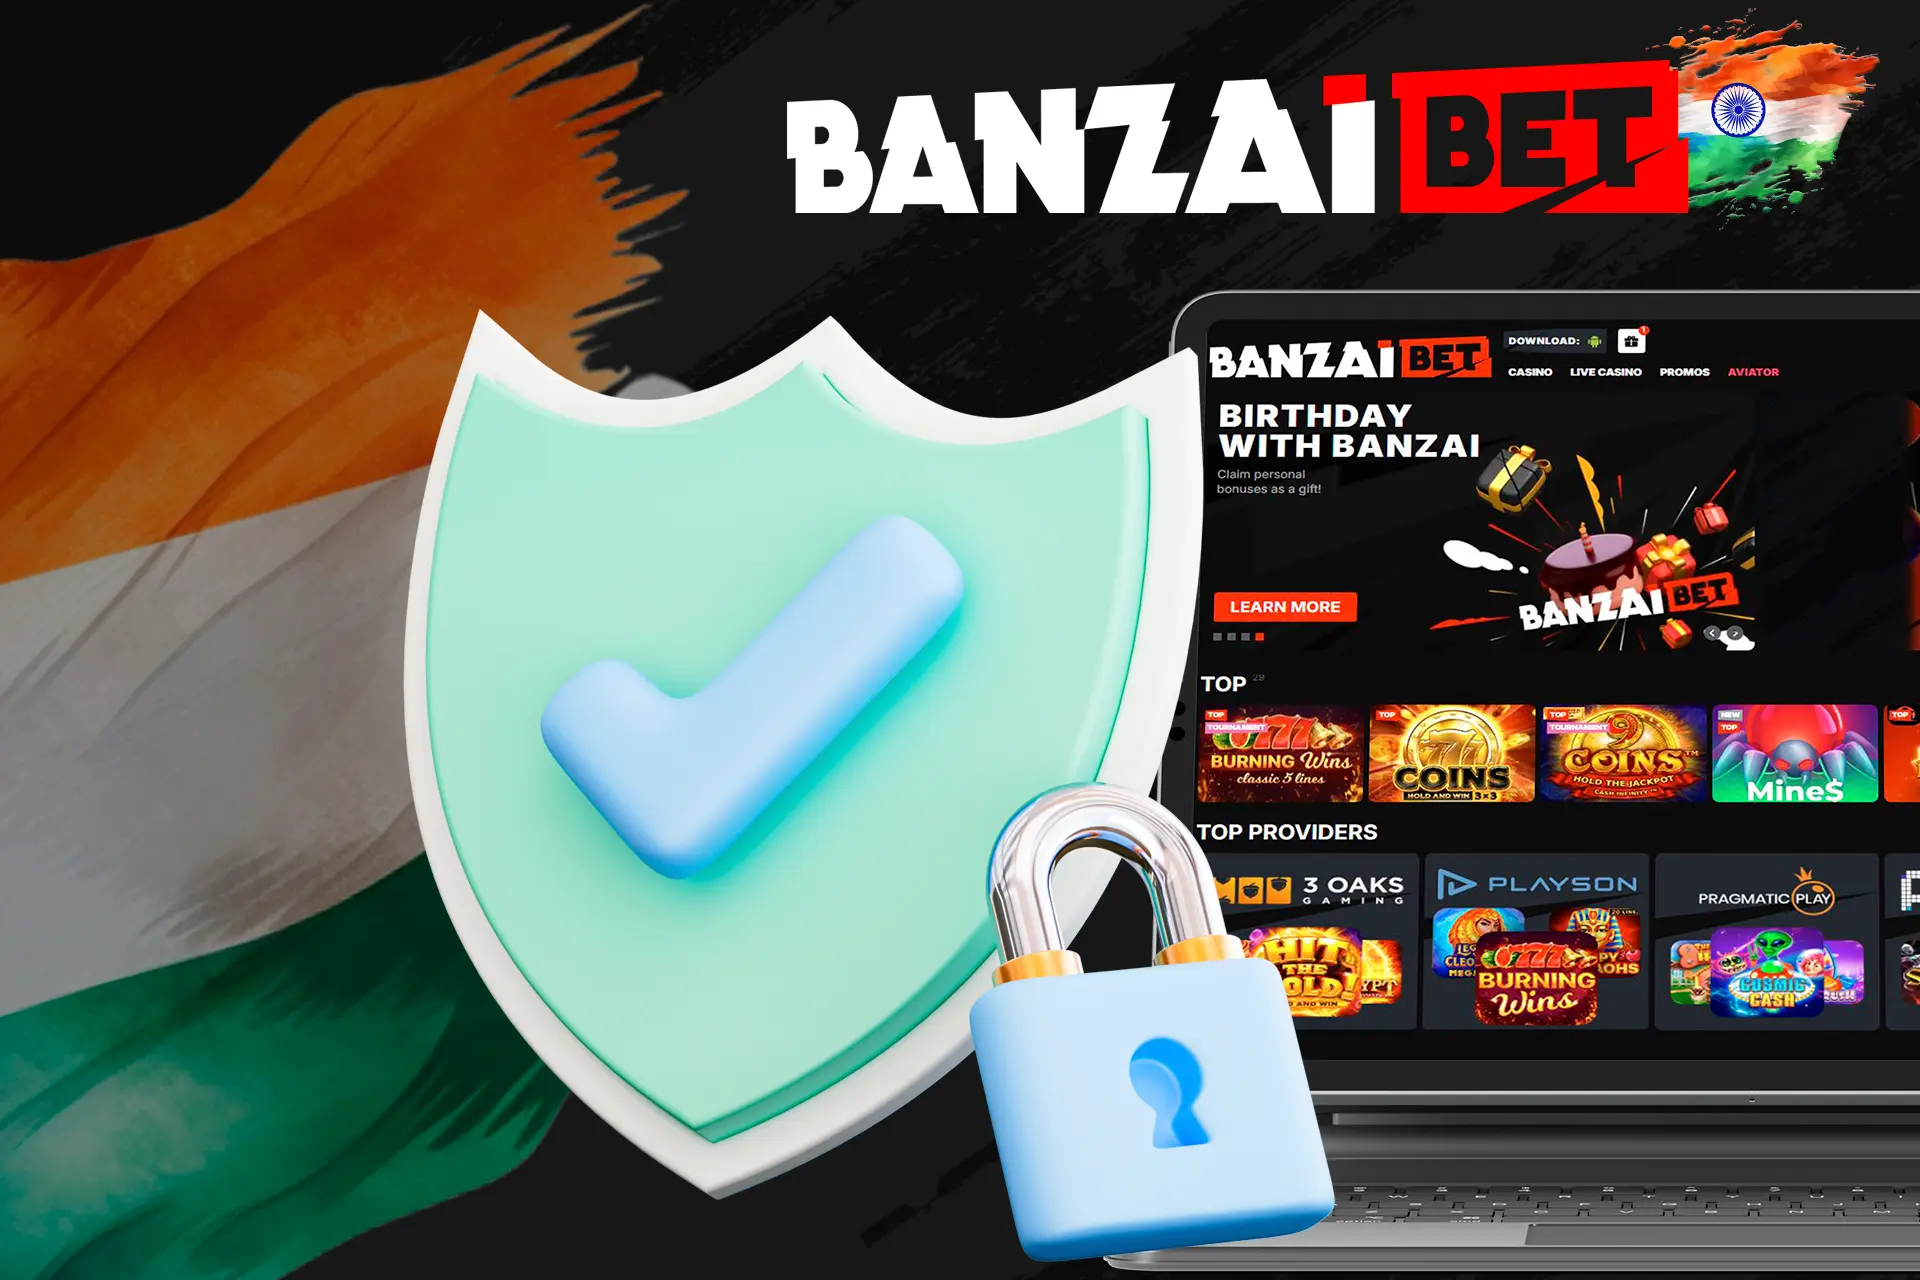 Banzaibet is a legal casino in India